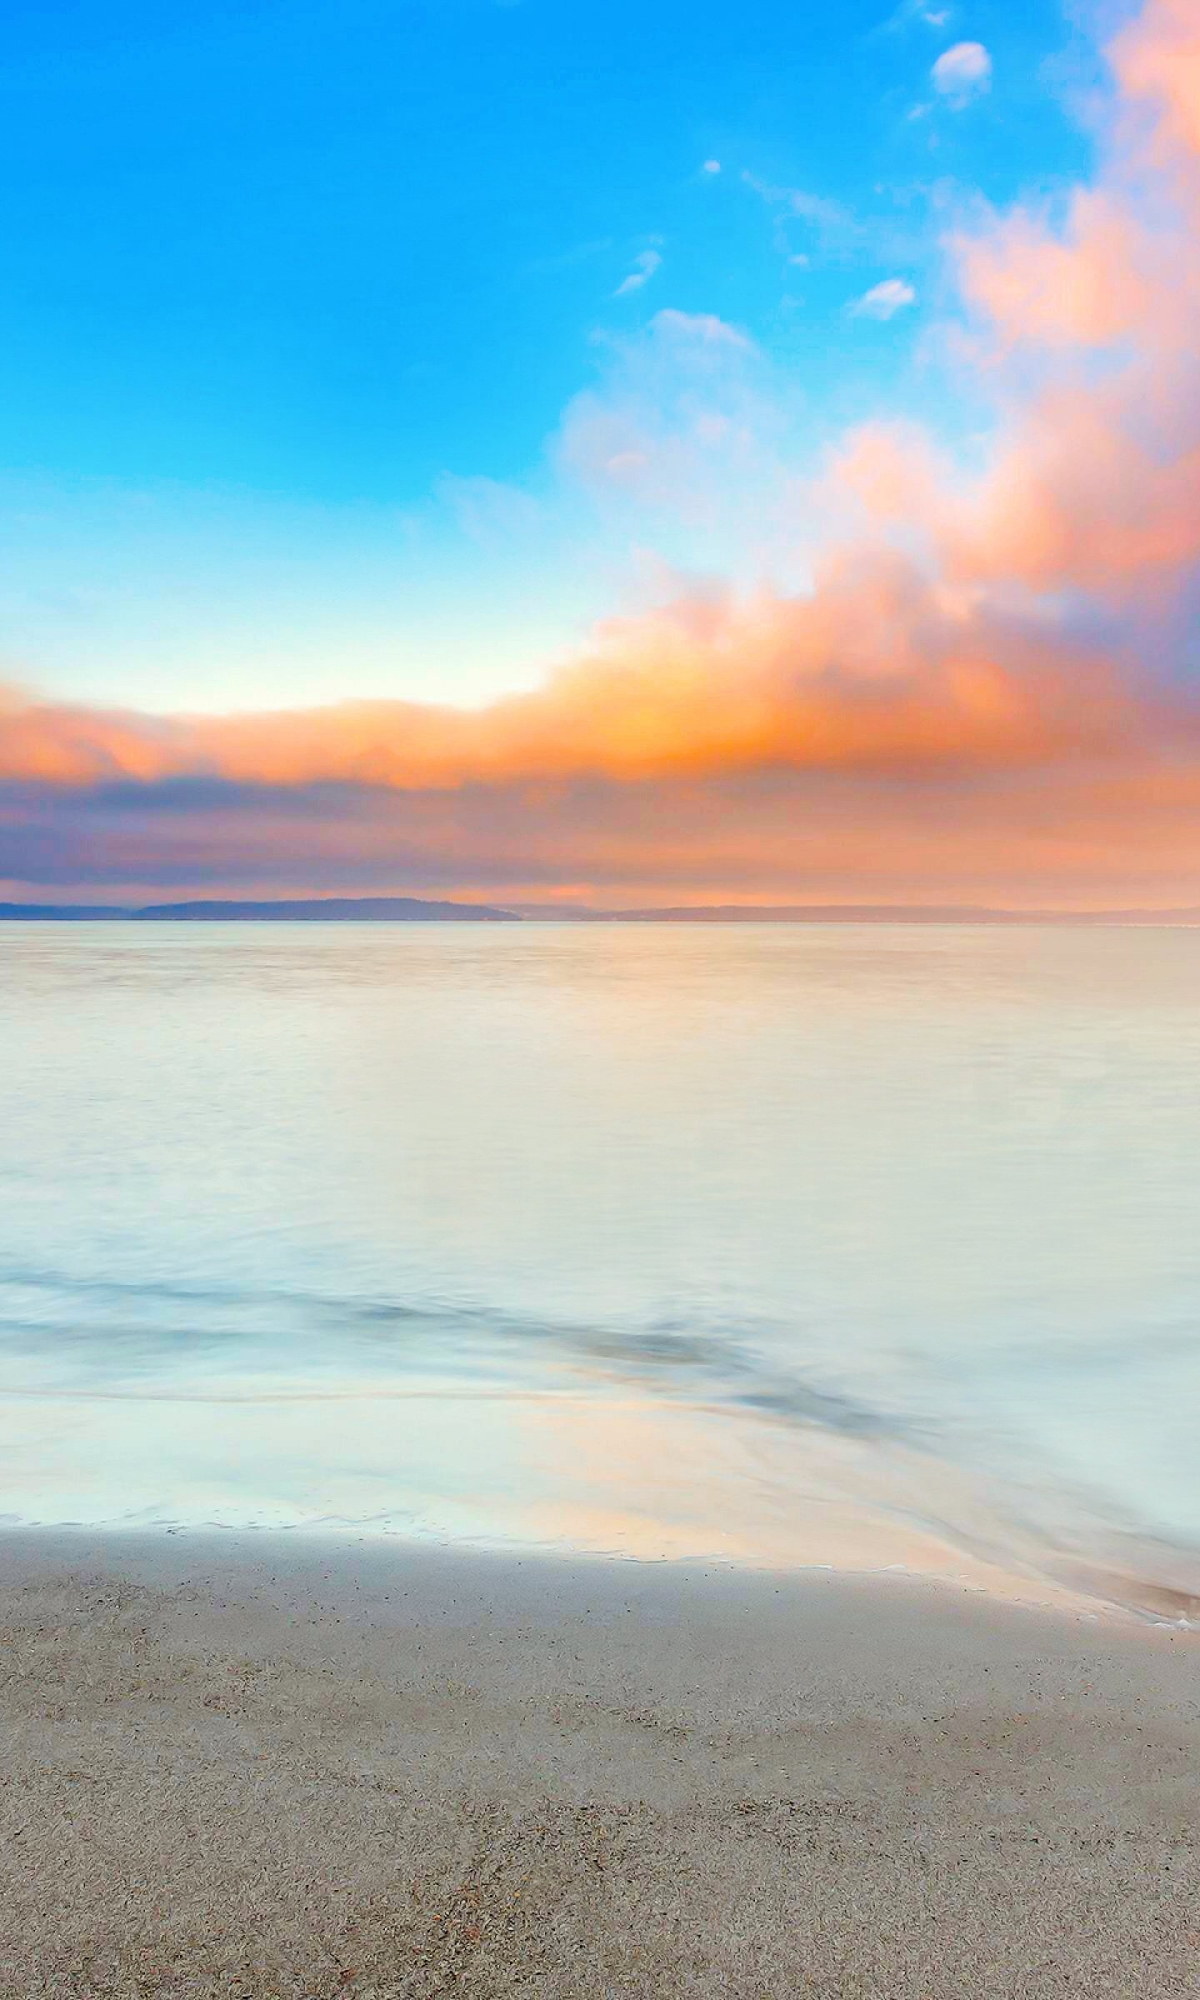 Descarga gratuita de fondo de pantalla para móvil de Cielo, Mar, Playa, Horizonte, Nube, Pintoresco, Tierra/naturaleza.